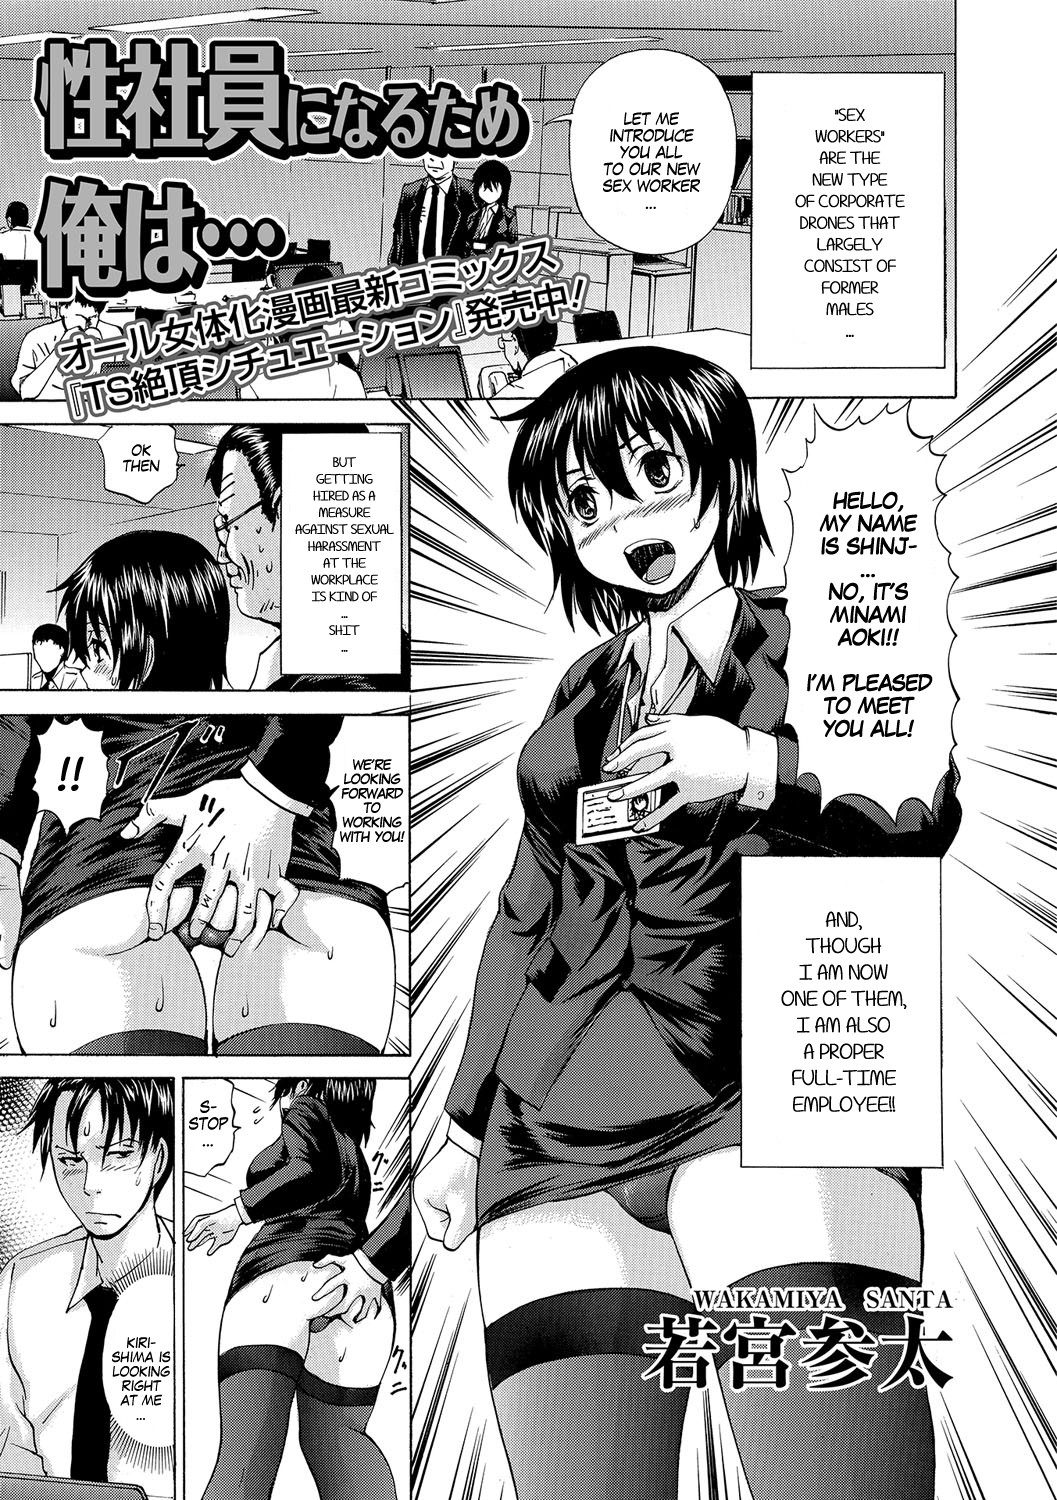 Hentai Manga Comic-I Wanted To Get Employed And So I...-Read-1